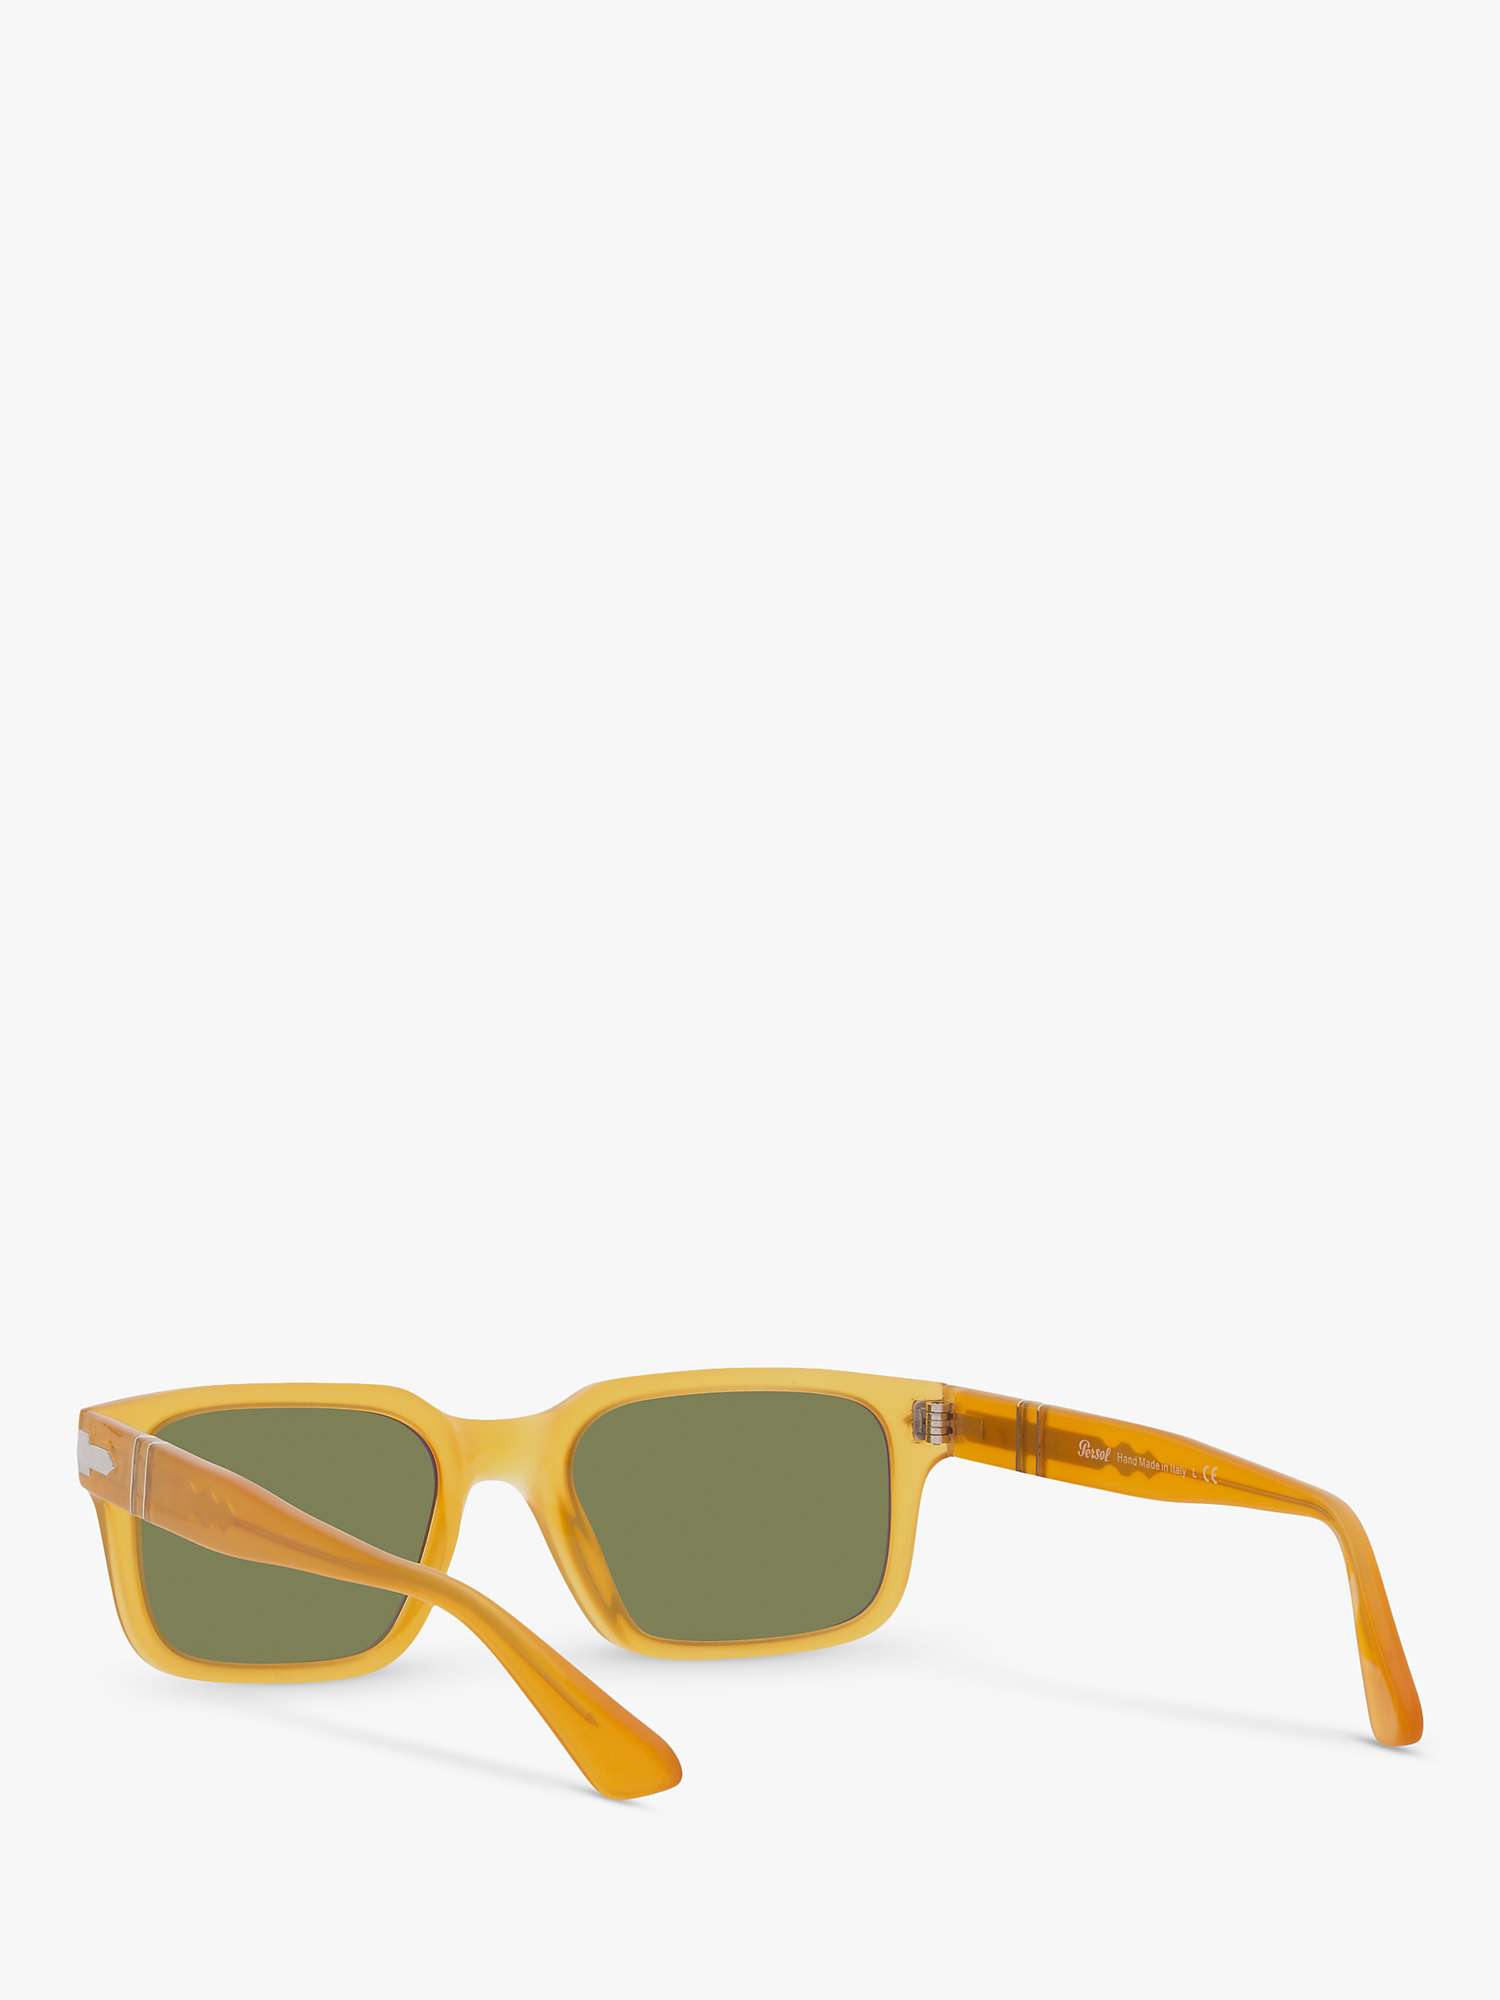 Buy Persol PO3272S Men's Rectangular Sunglasses, Honey/Green Online at johnlewis.com